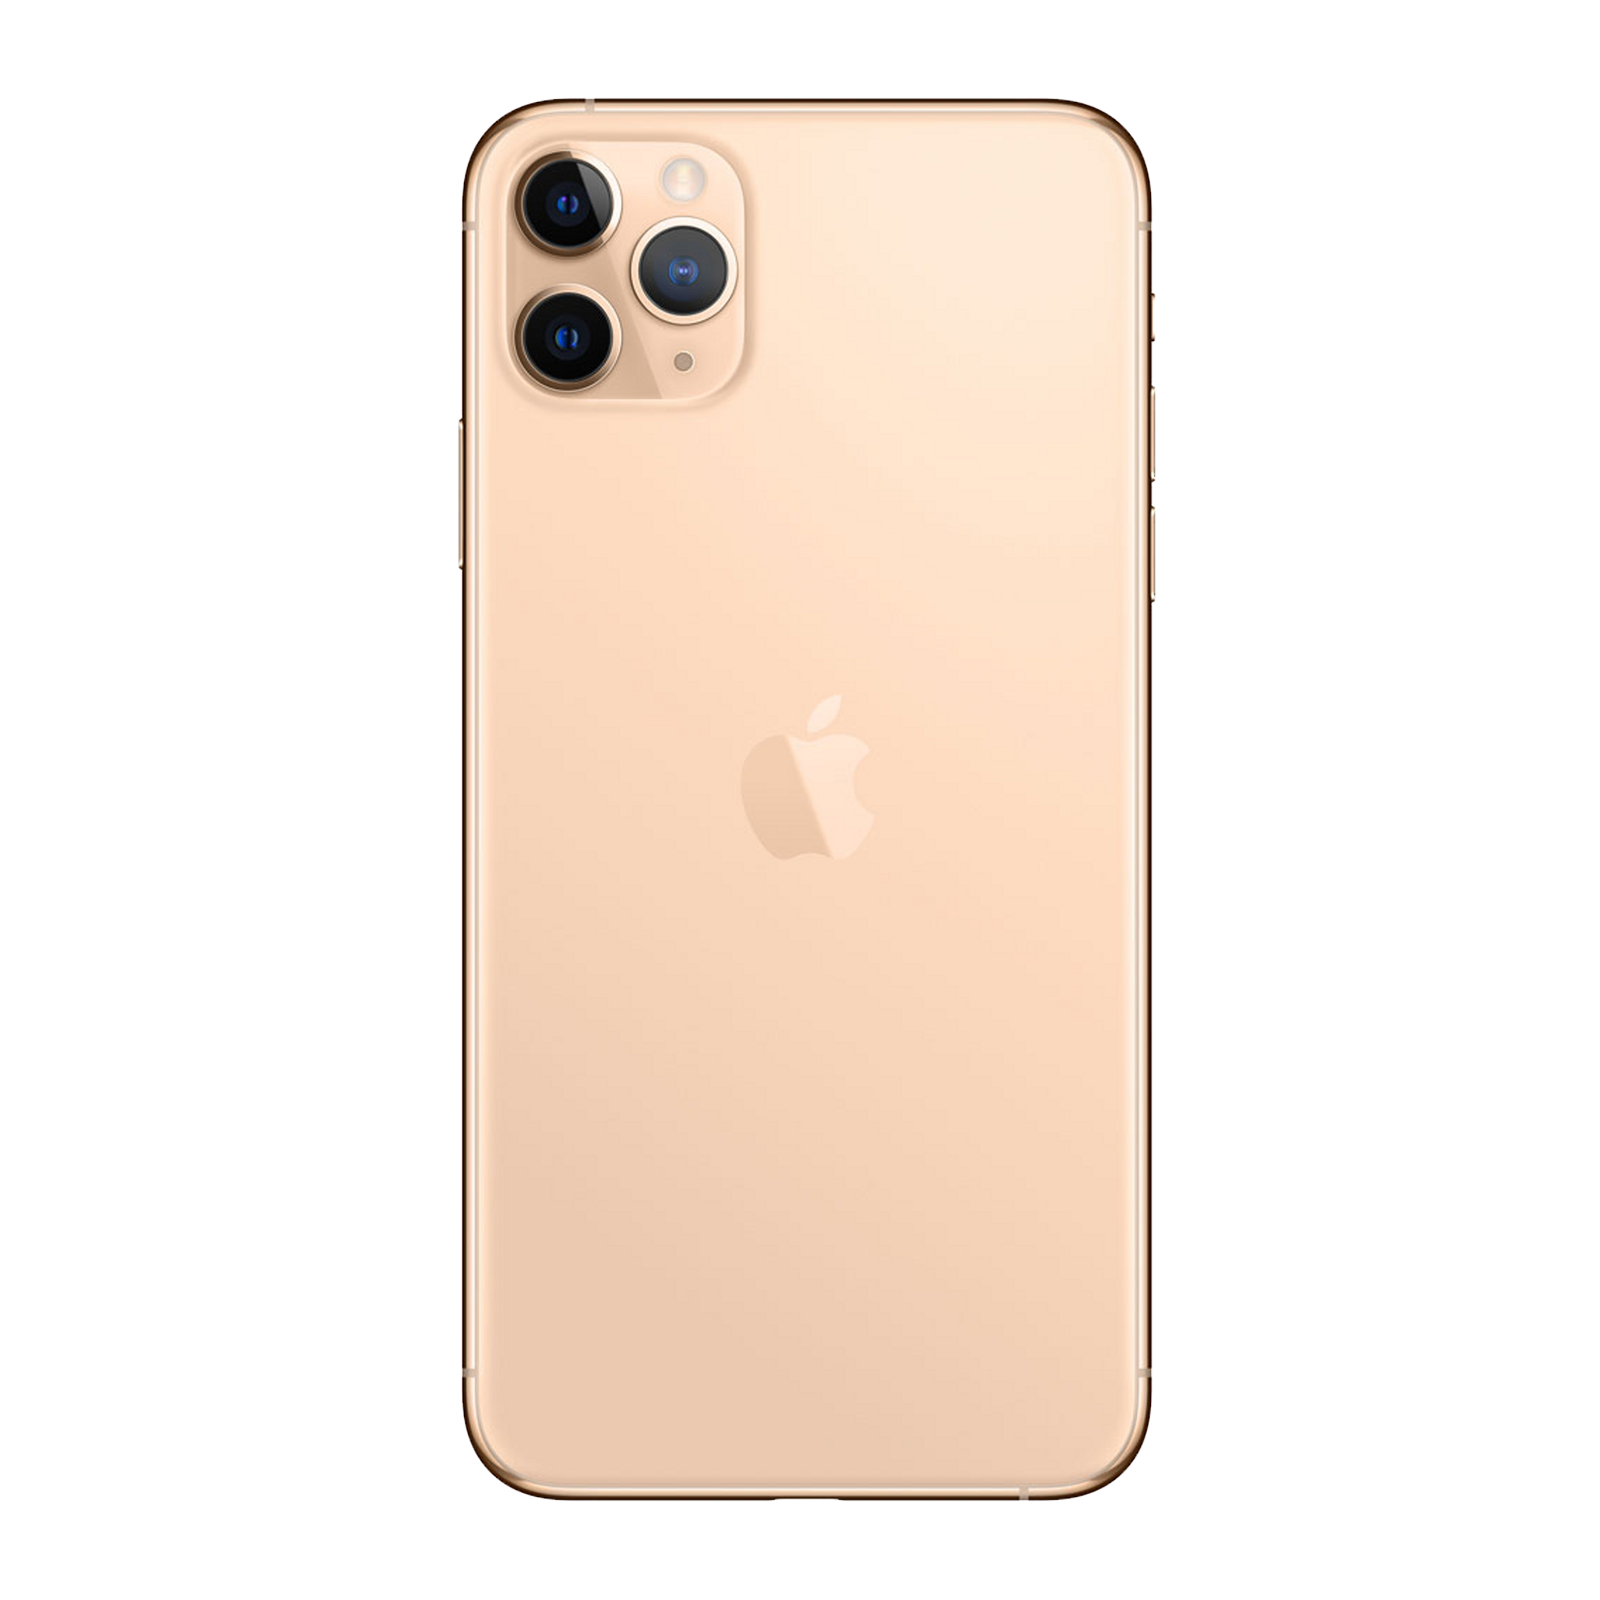 Apple iPhone 11 Pro Max 512GB Gold Fair - Verizon